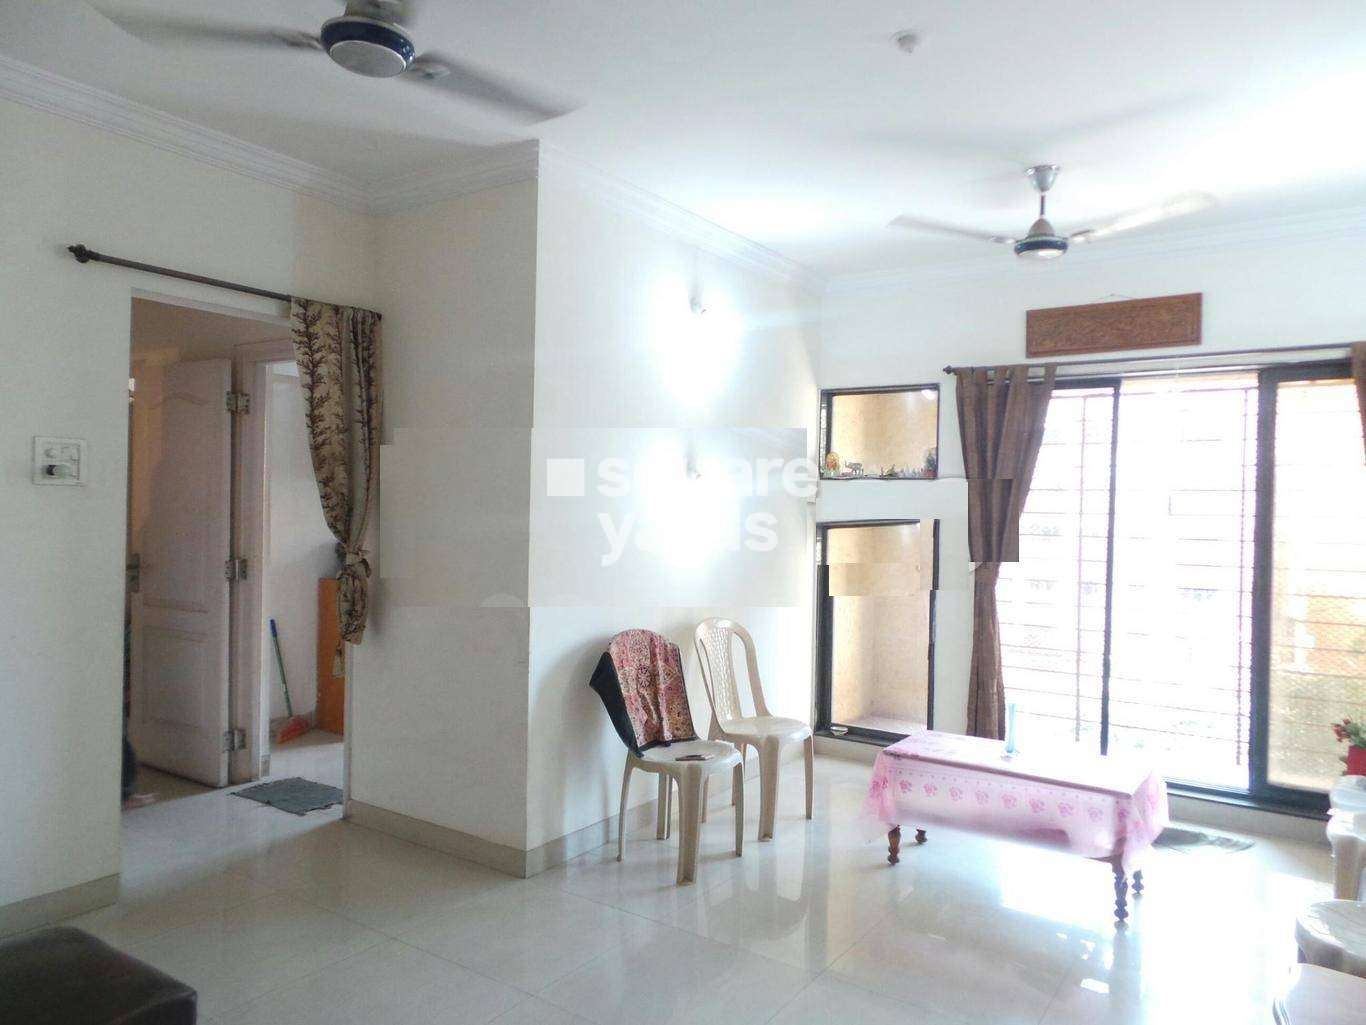 ashish swapnalok towers project apartment interiors1